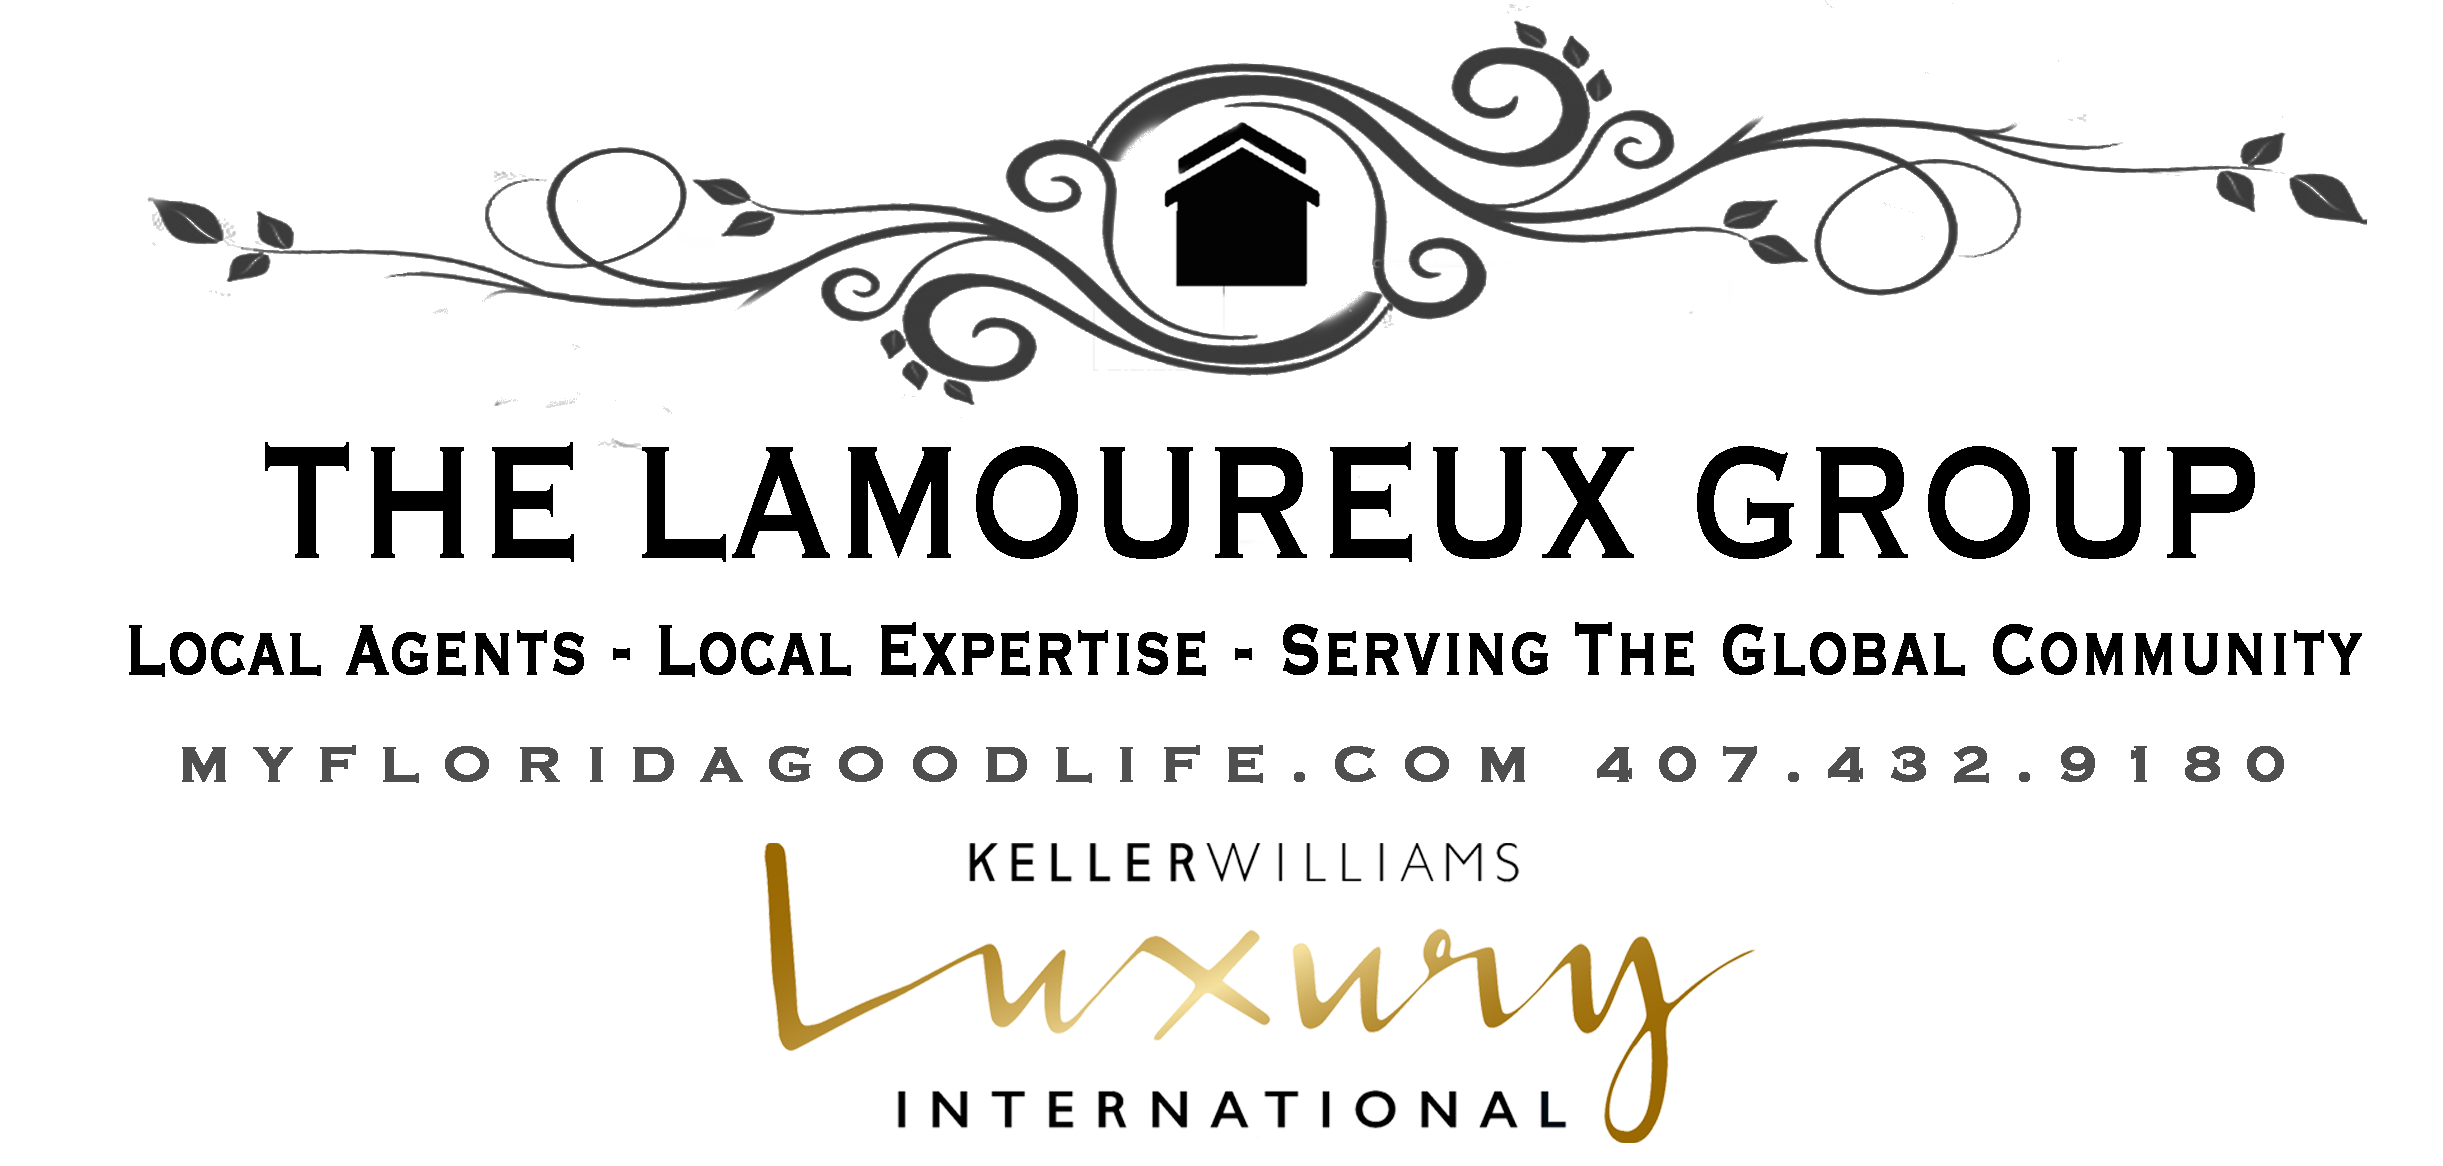 The Lemoureux Group/Keller Williams Realty